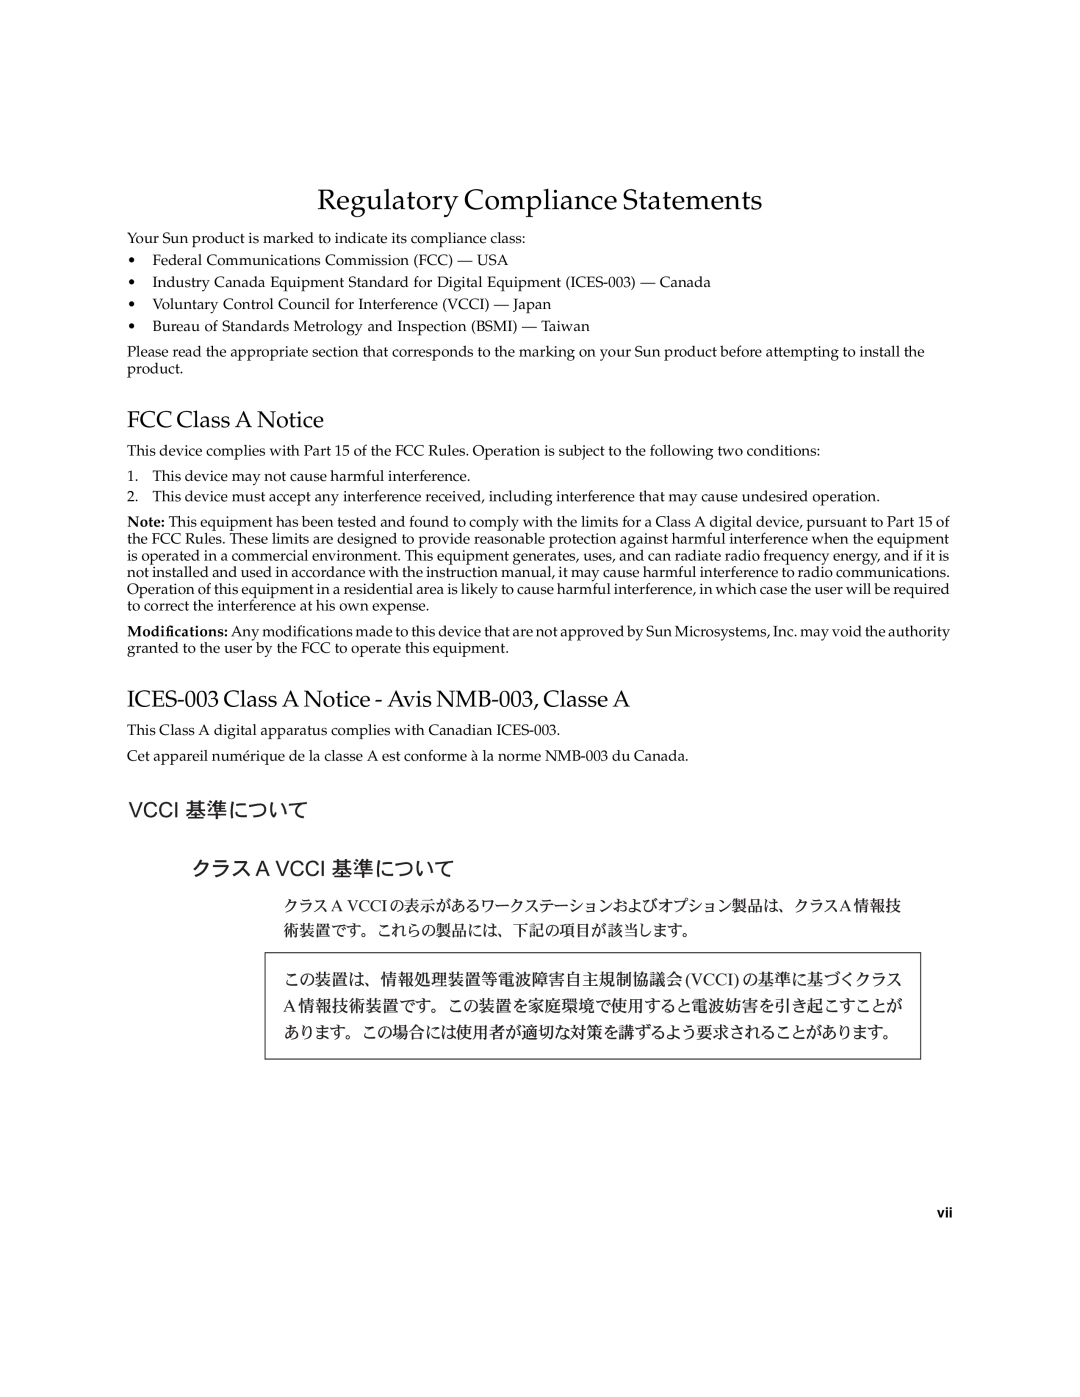 Sun Microsystems SG-XPCIE1FC-EM8-Z, SG-XPCIE2FC-EM8-Z manual Regulatory Compliance Statements, FCC Class A Notice 